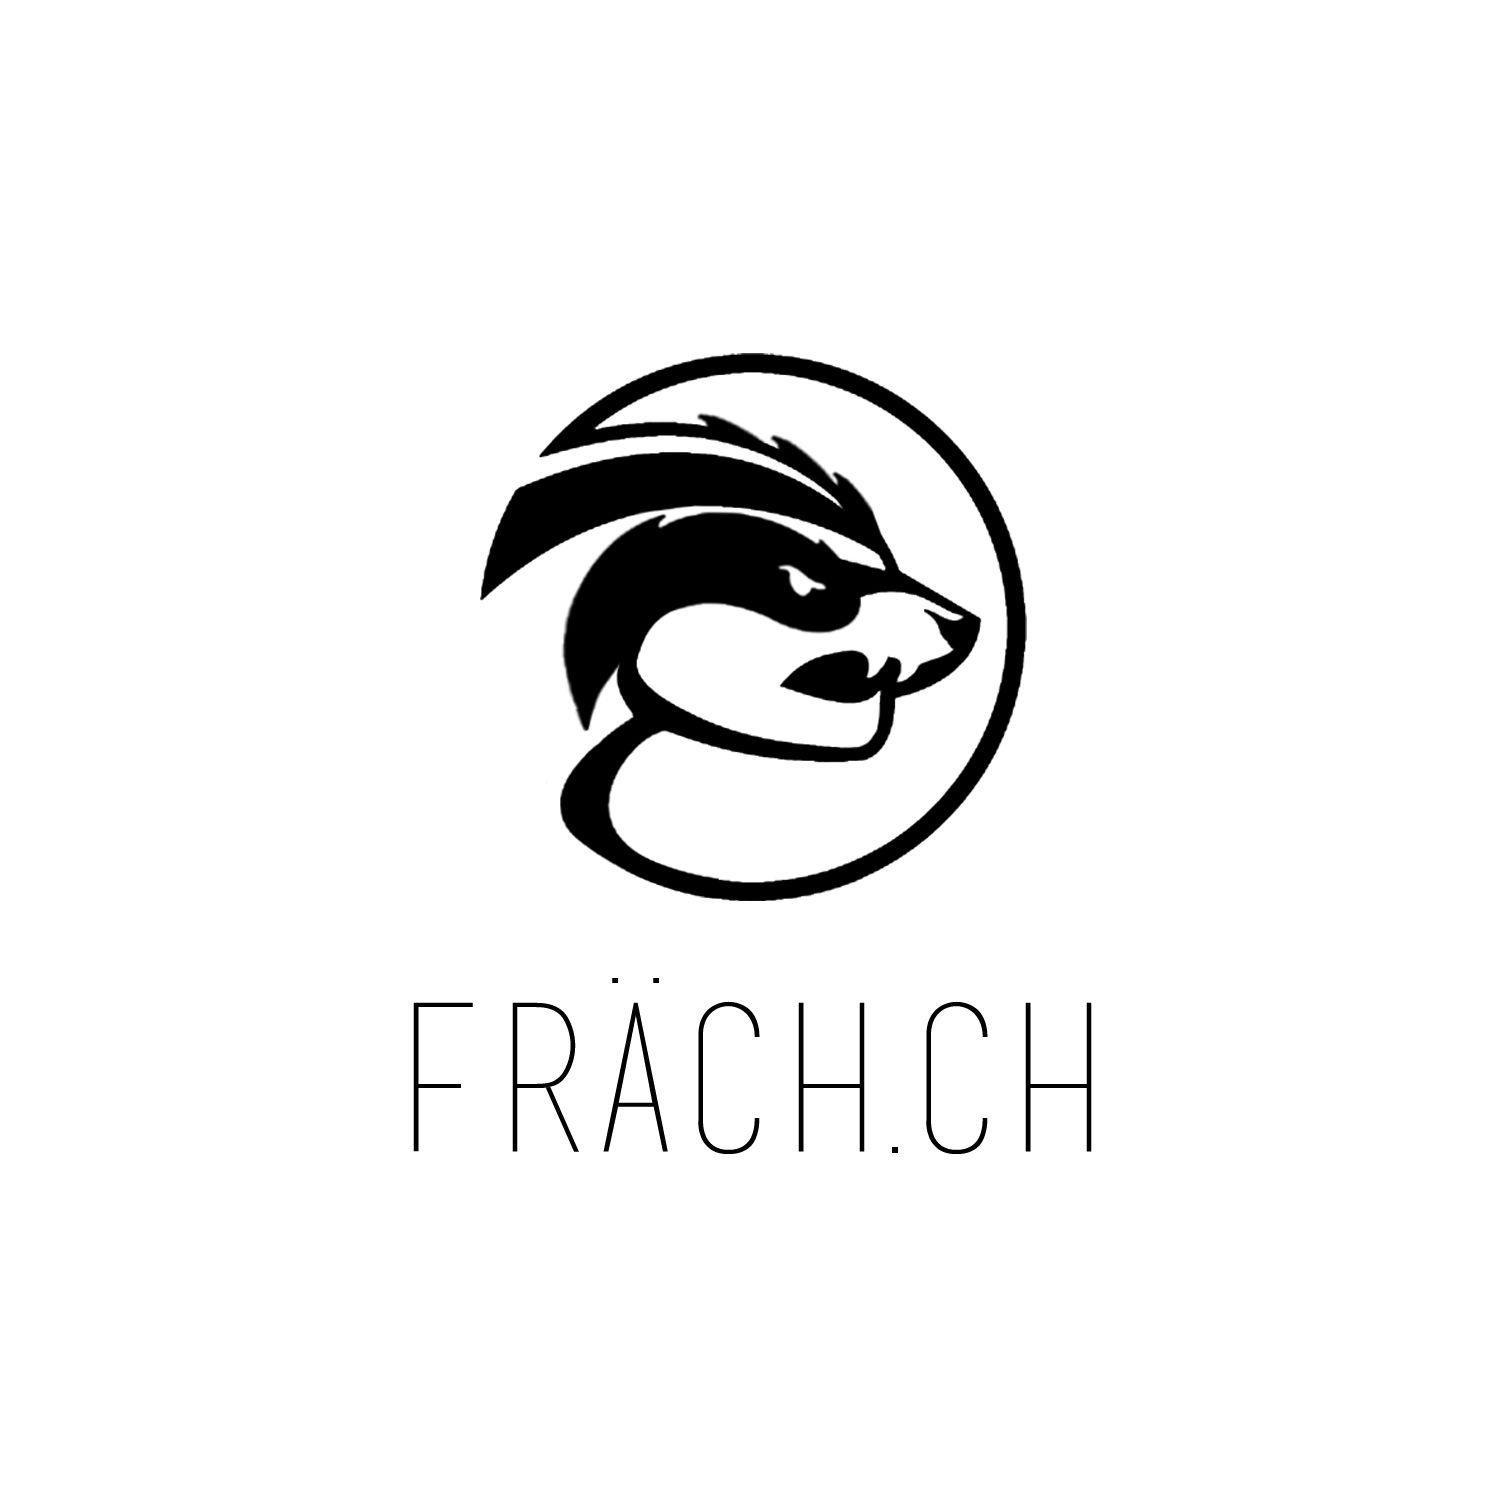 Ashton Company Logo - Modern, Conservative, Fashion Logo Design for FRäCH.ch by Kyle ...